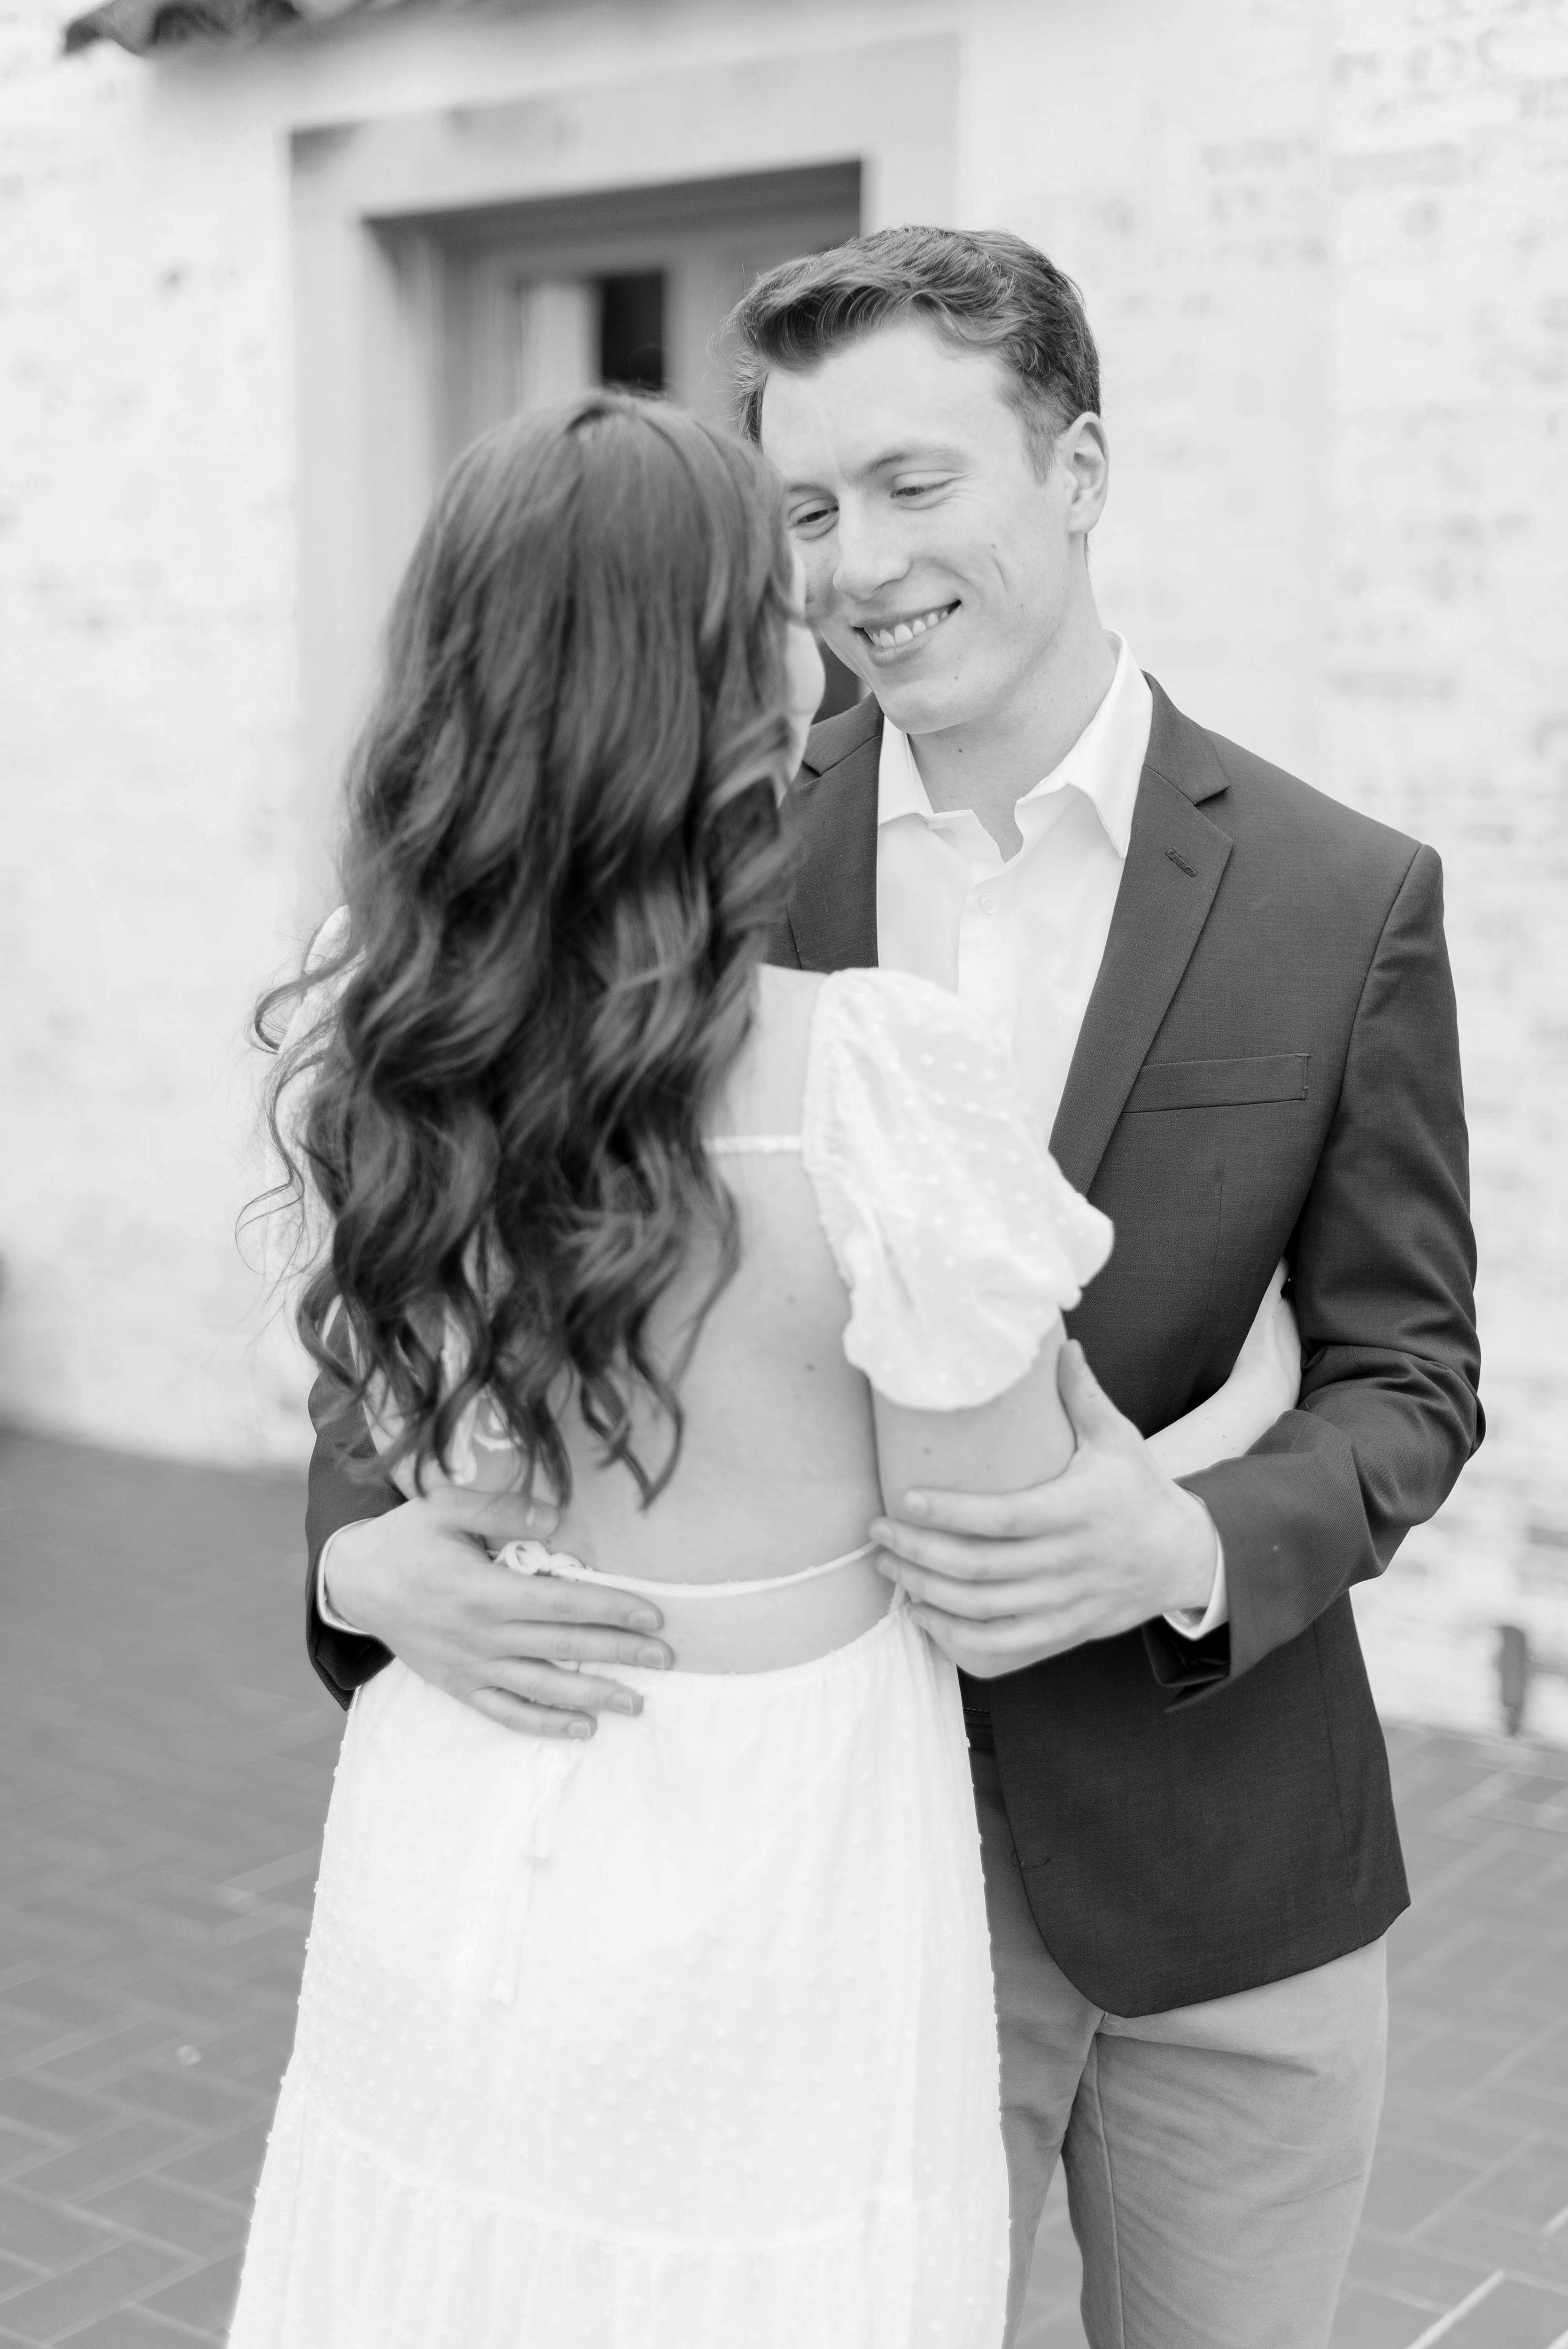 The Wedding Website of Rebecca Chavin and Jake Schaum